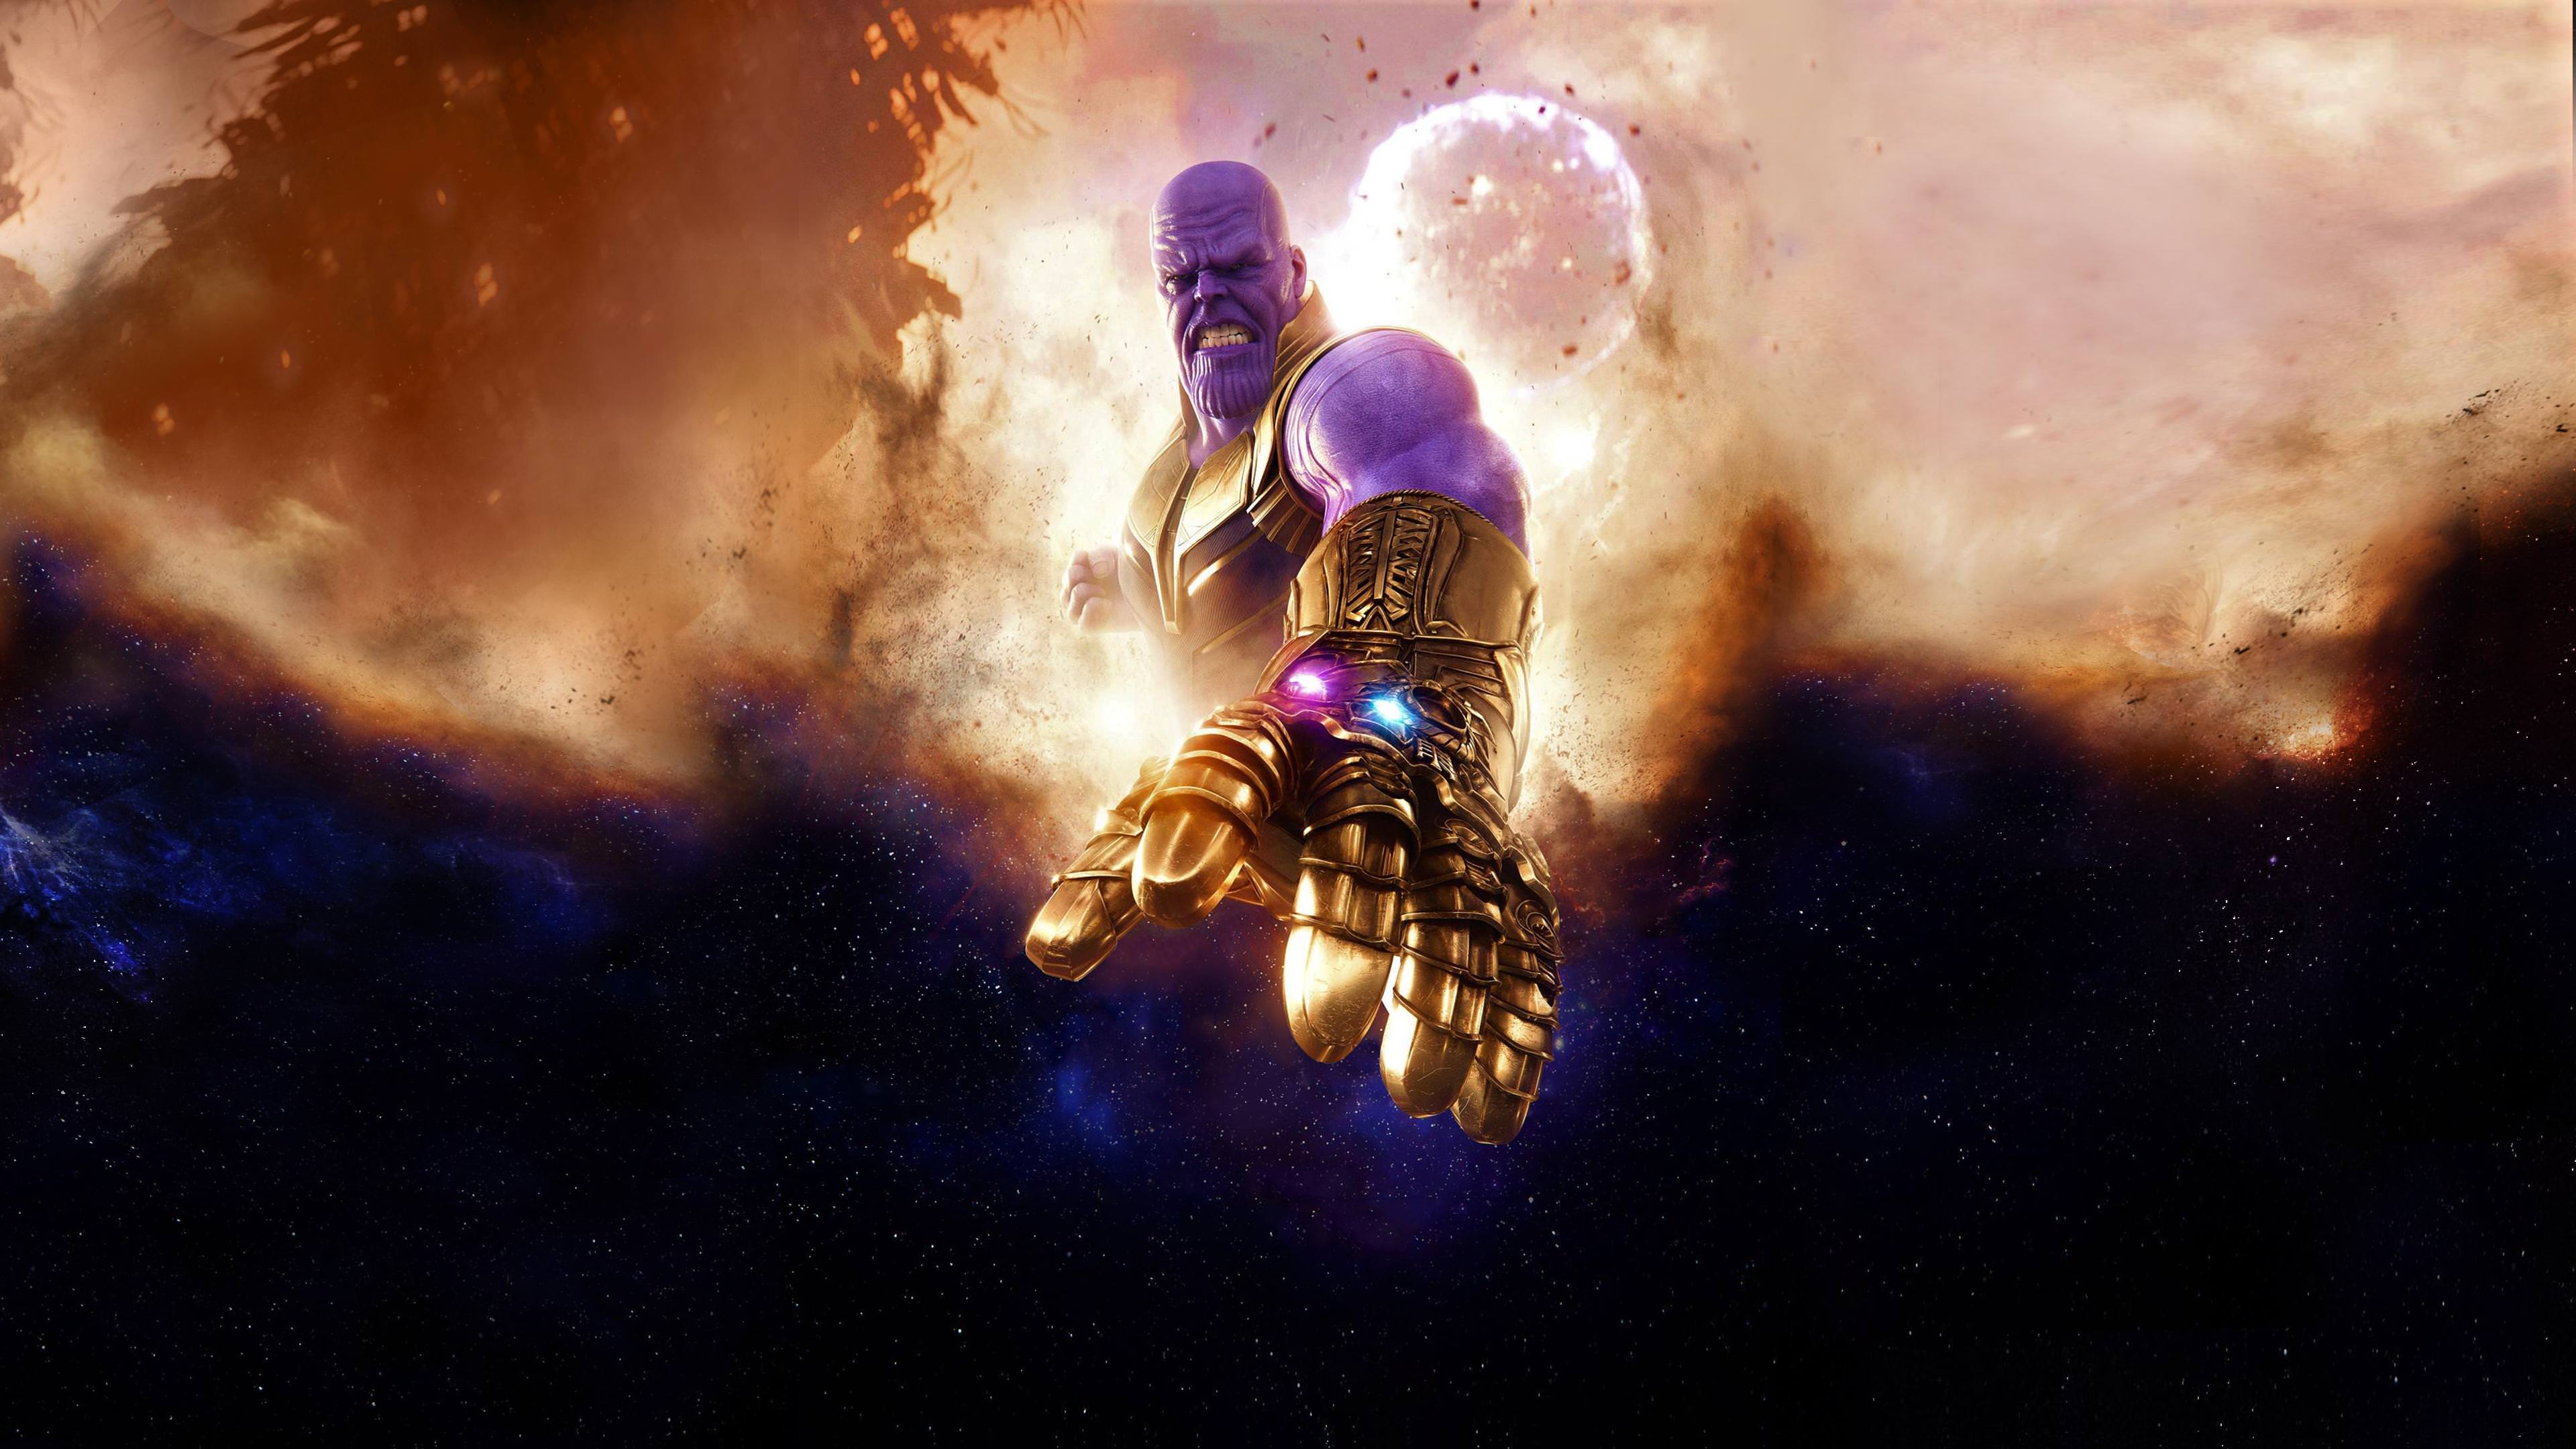 Thanos in Avengers Infinity War 4K Wallpaper